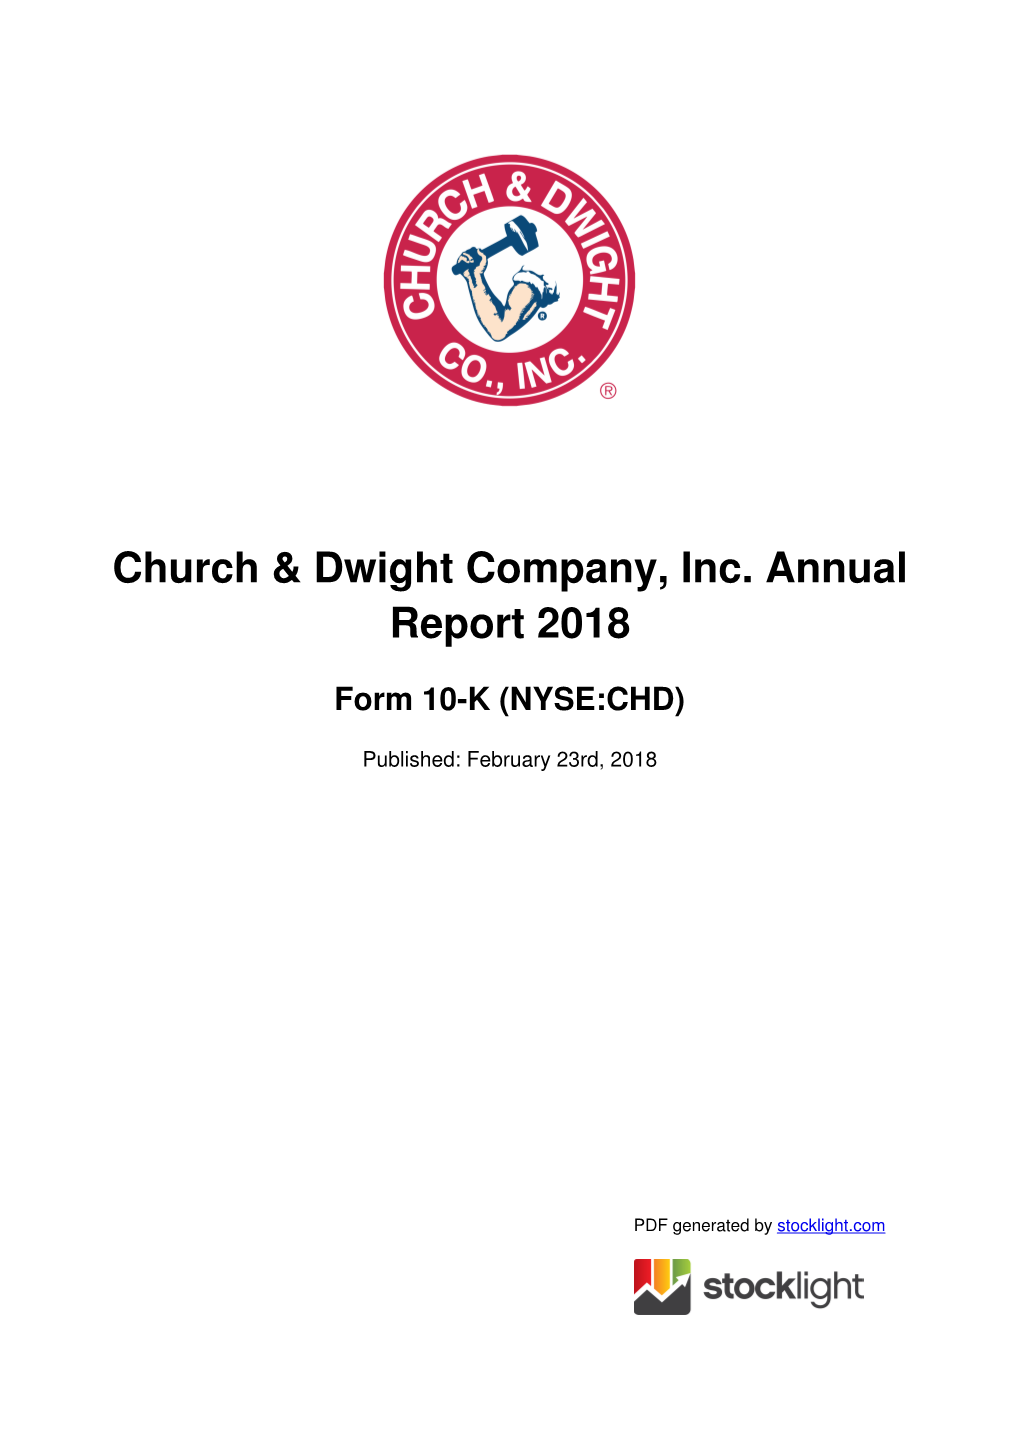 Church & Dwight Company, Inc. Annual Report 2018